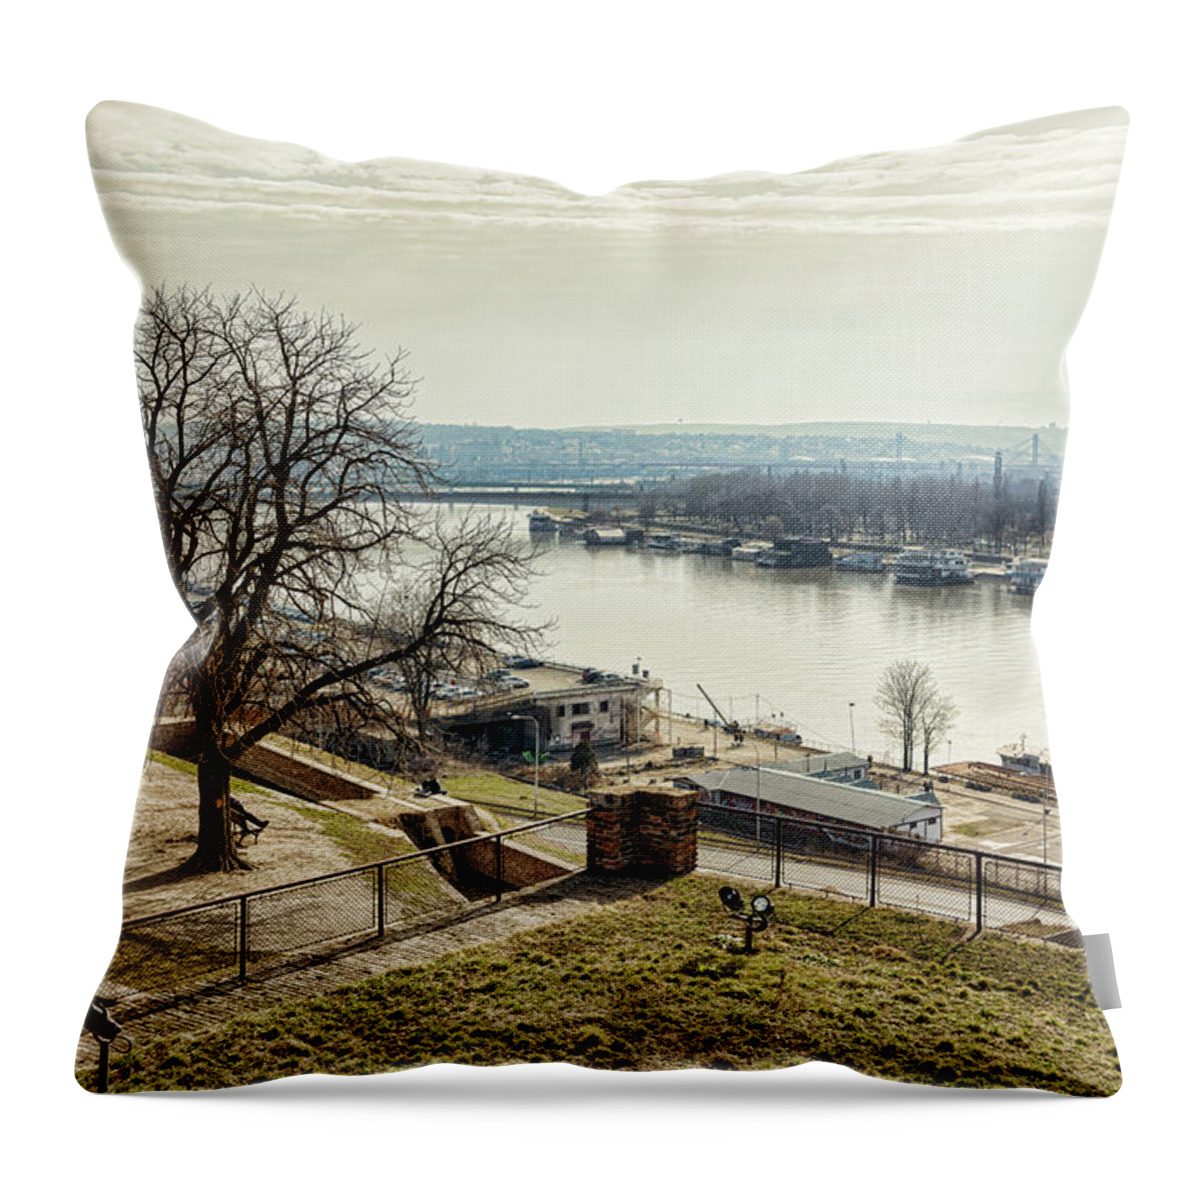 Belgrade Throw Pillow featuring the photograph Kalemegdan Park Fortress in Belgrade by Milan Ljubisavljevic